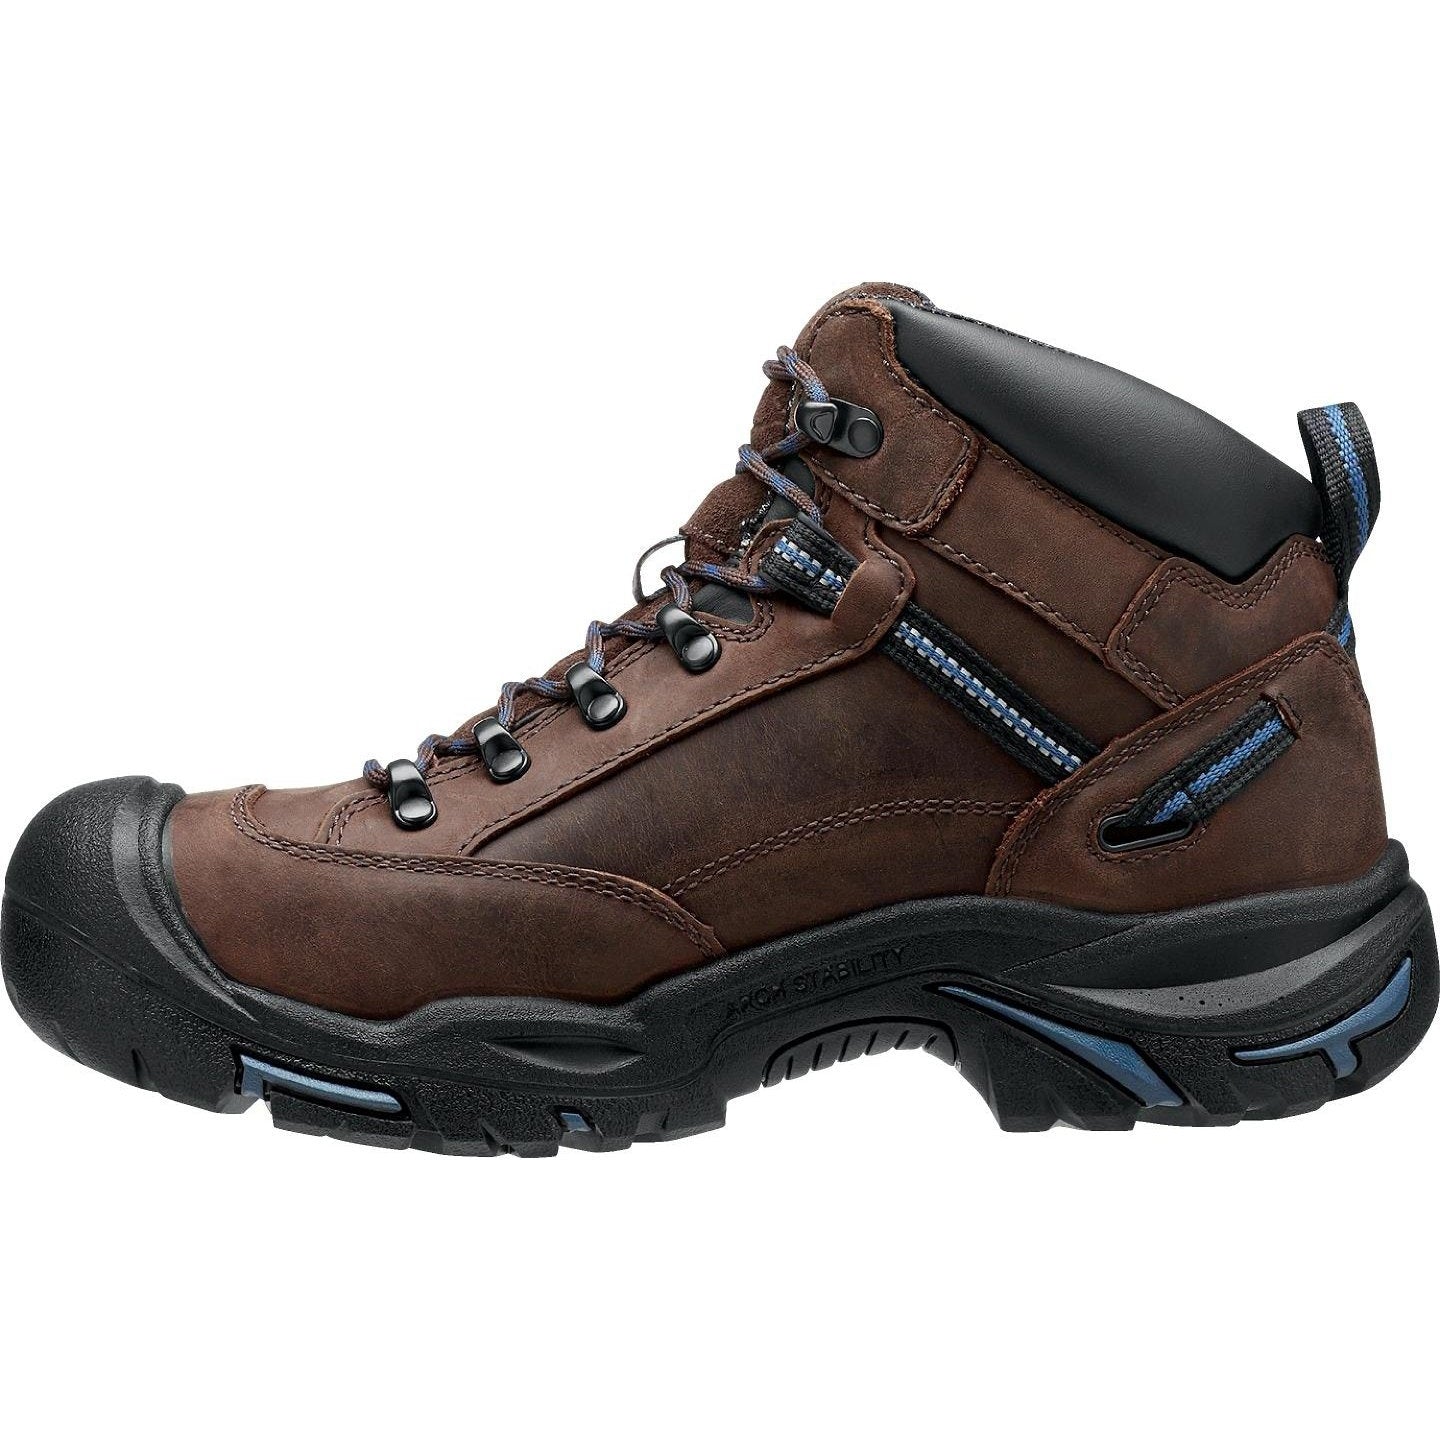 Keen Utility Men's Braddock USA Built Stl Toe WP Work Boot Brown 1012771  - Overlook Boots